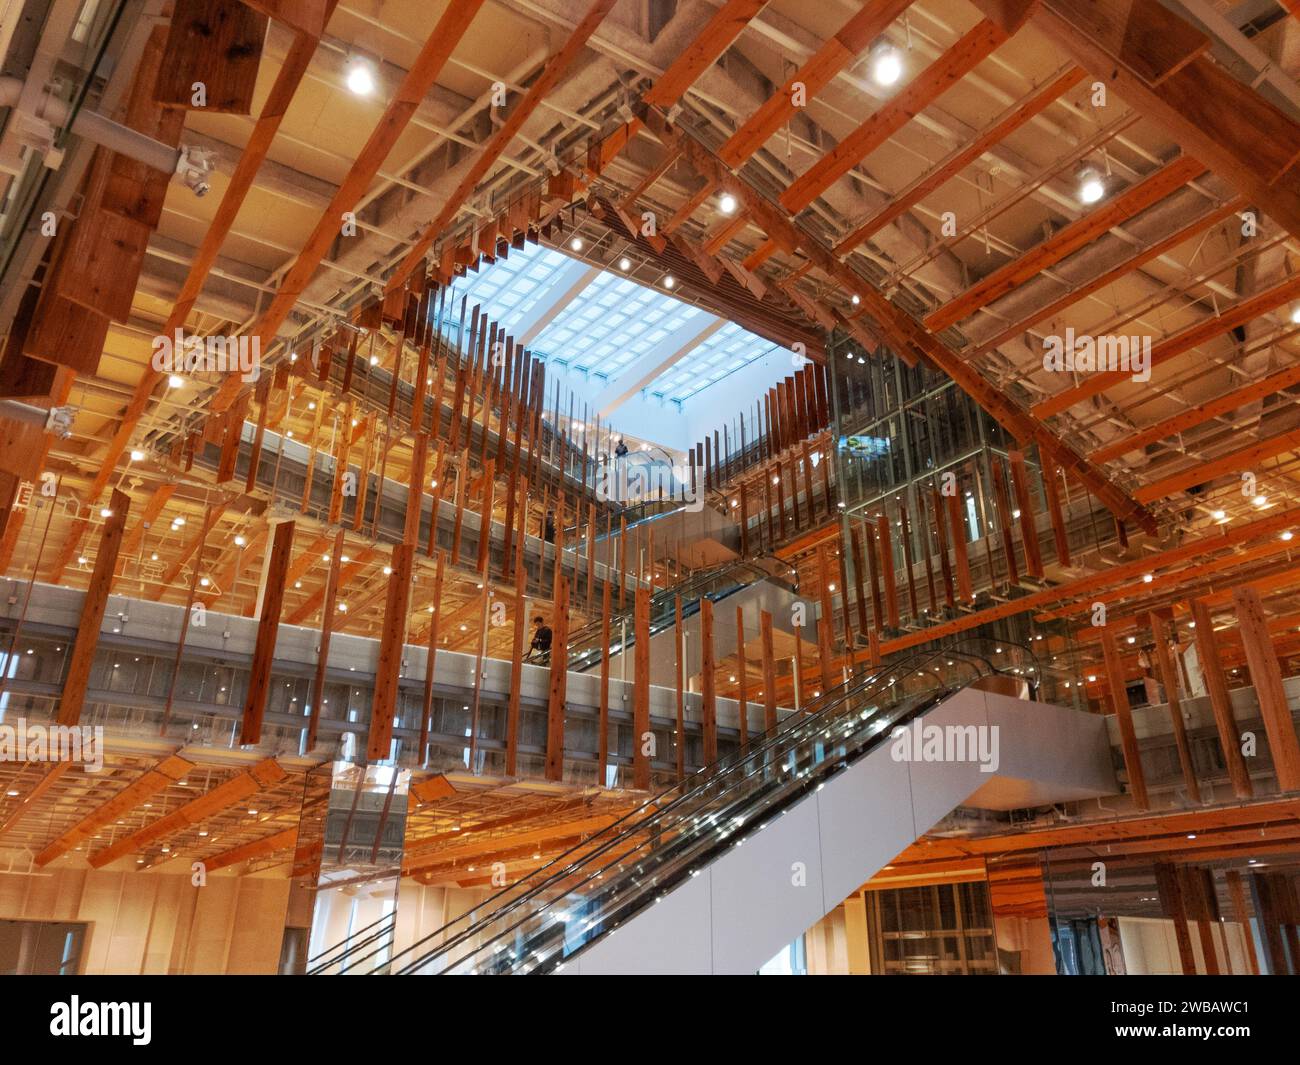 TOYAMA, JAPAN - JANUARY 30, 2017: Inside the Toyama City Public Library. The building opened in 2015. Stock Photo